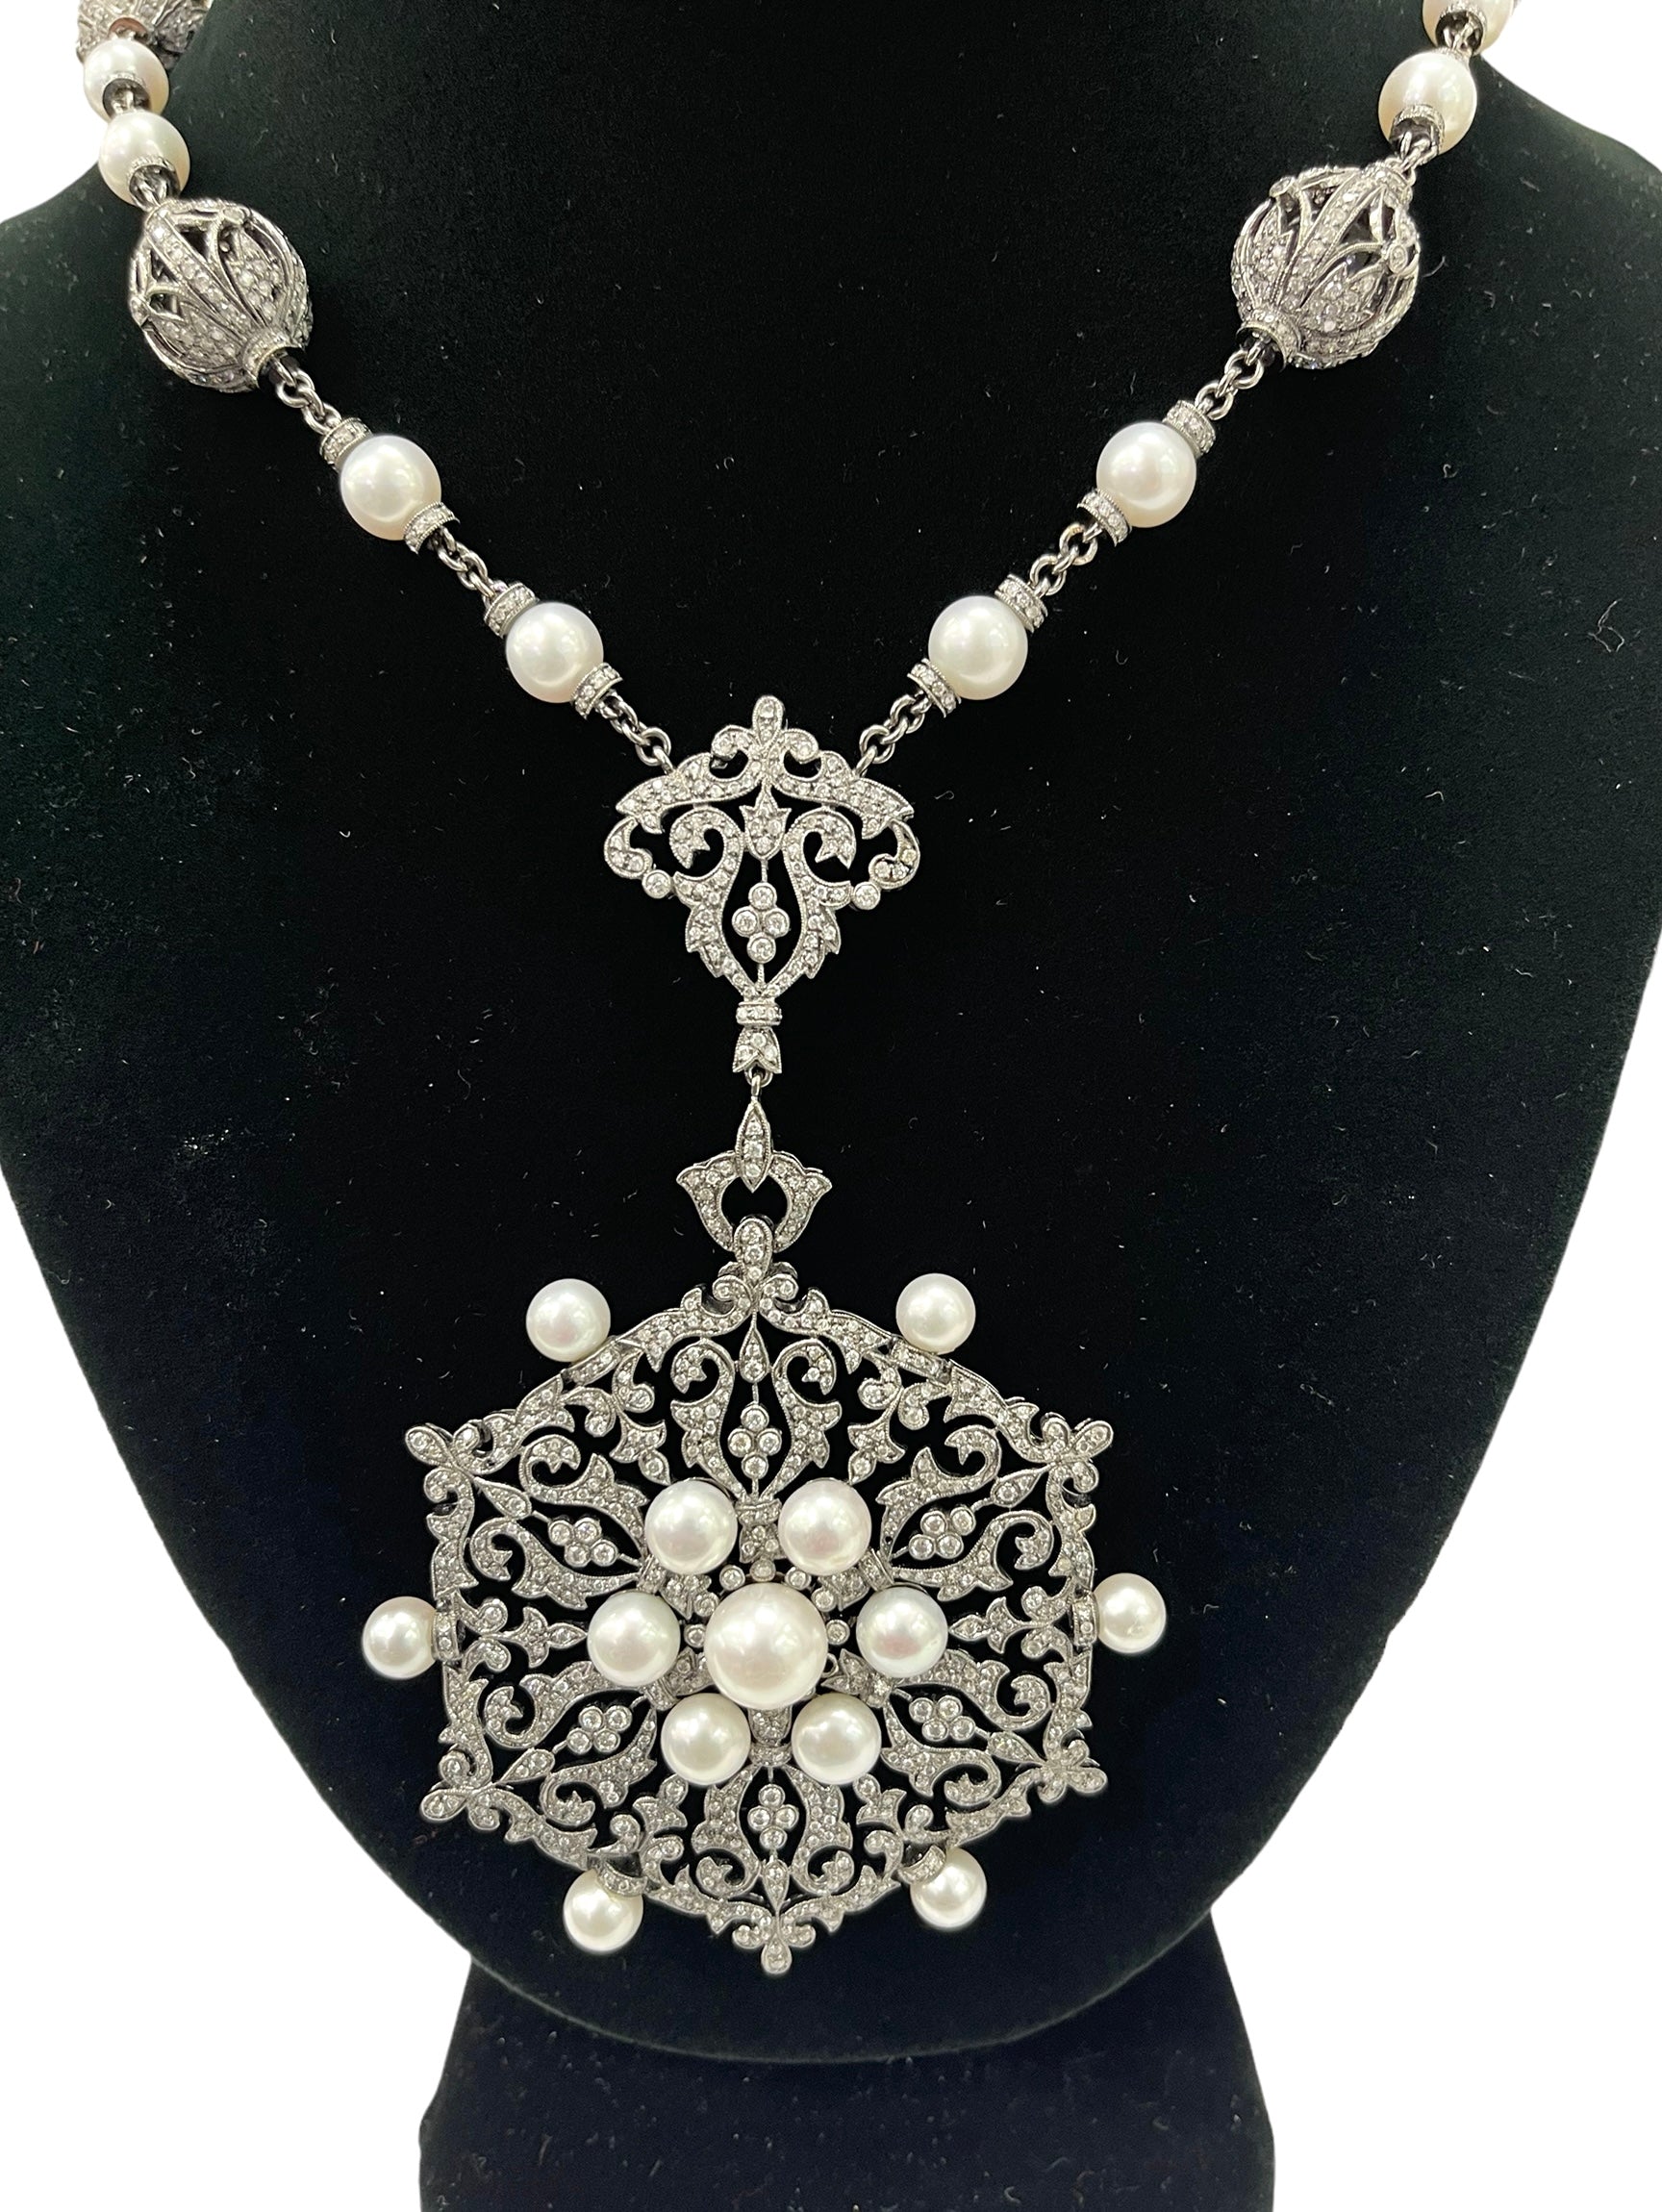 Antique Inspired Gala Diamond Necklace 14KT Black Rhodium Finish